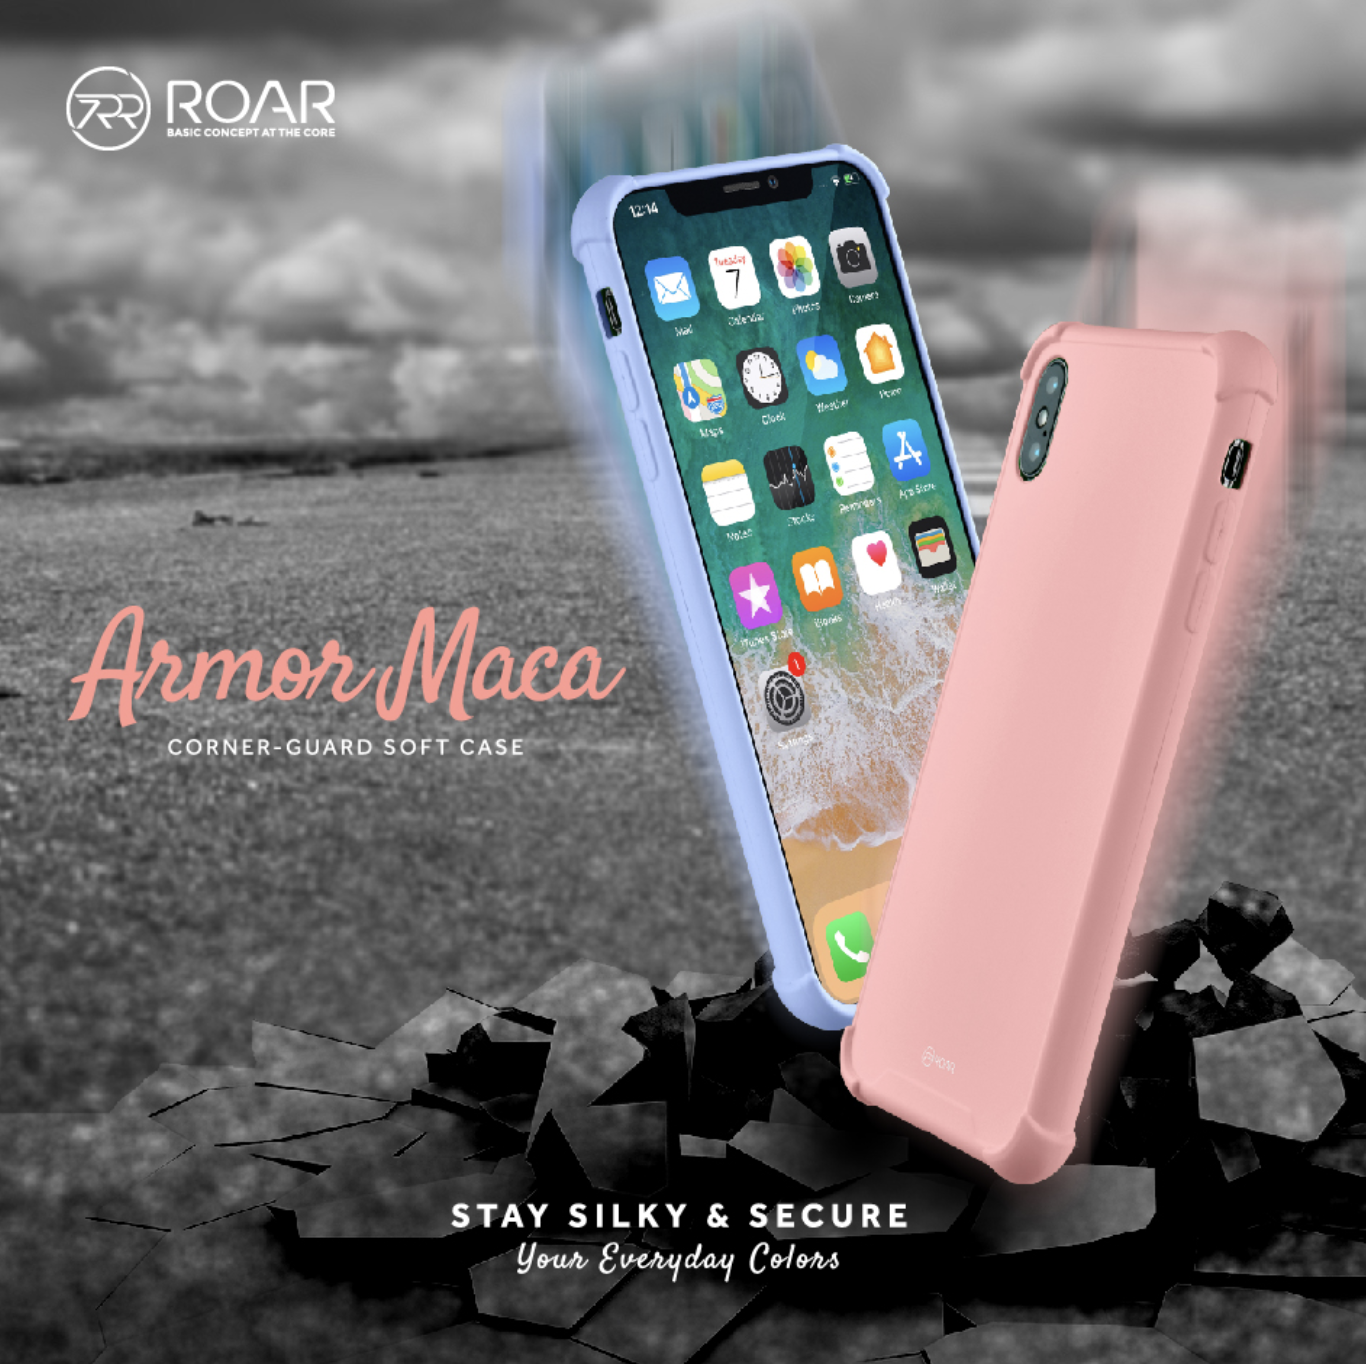 Roar Armor Maca, iPhone 6/6s